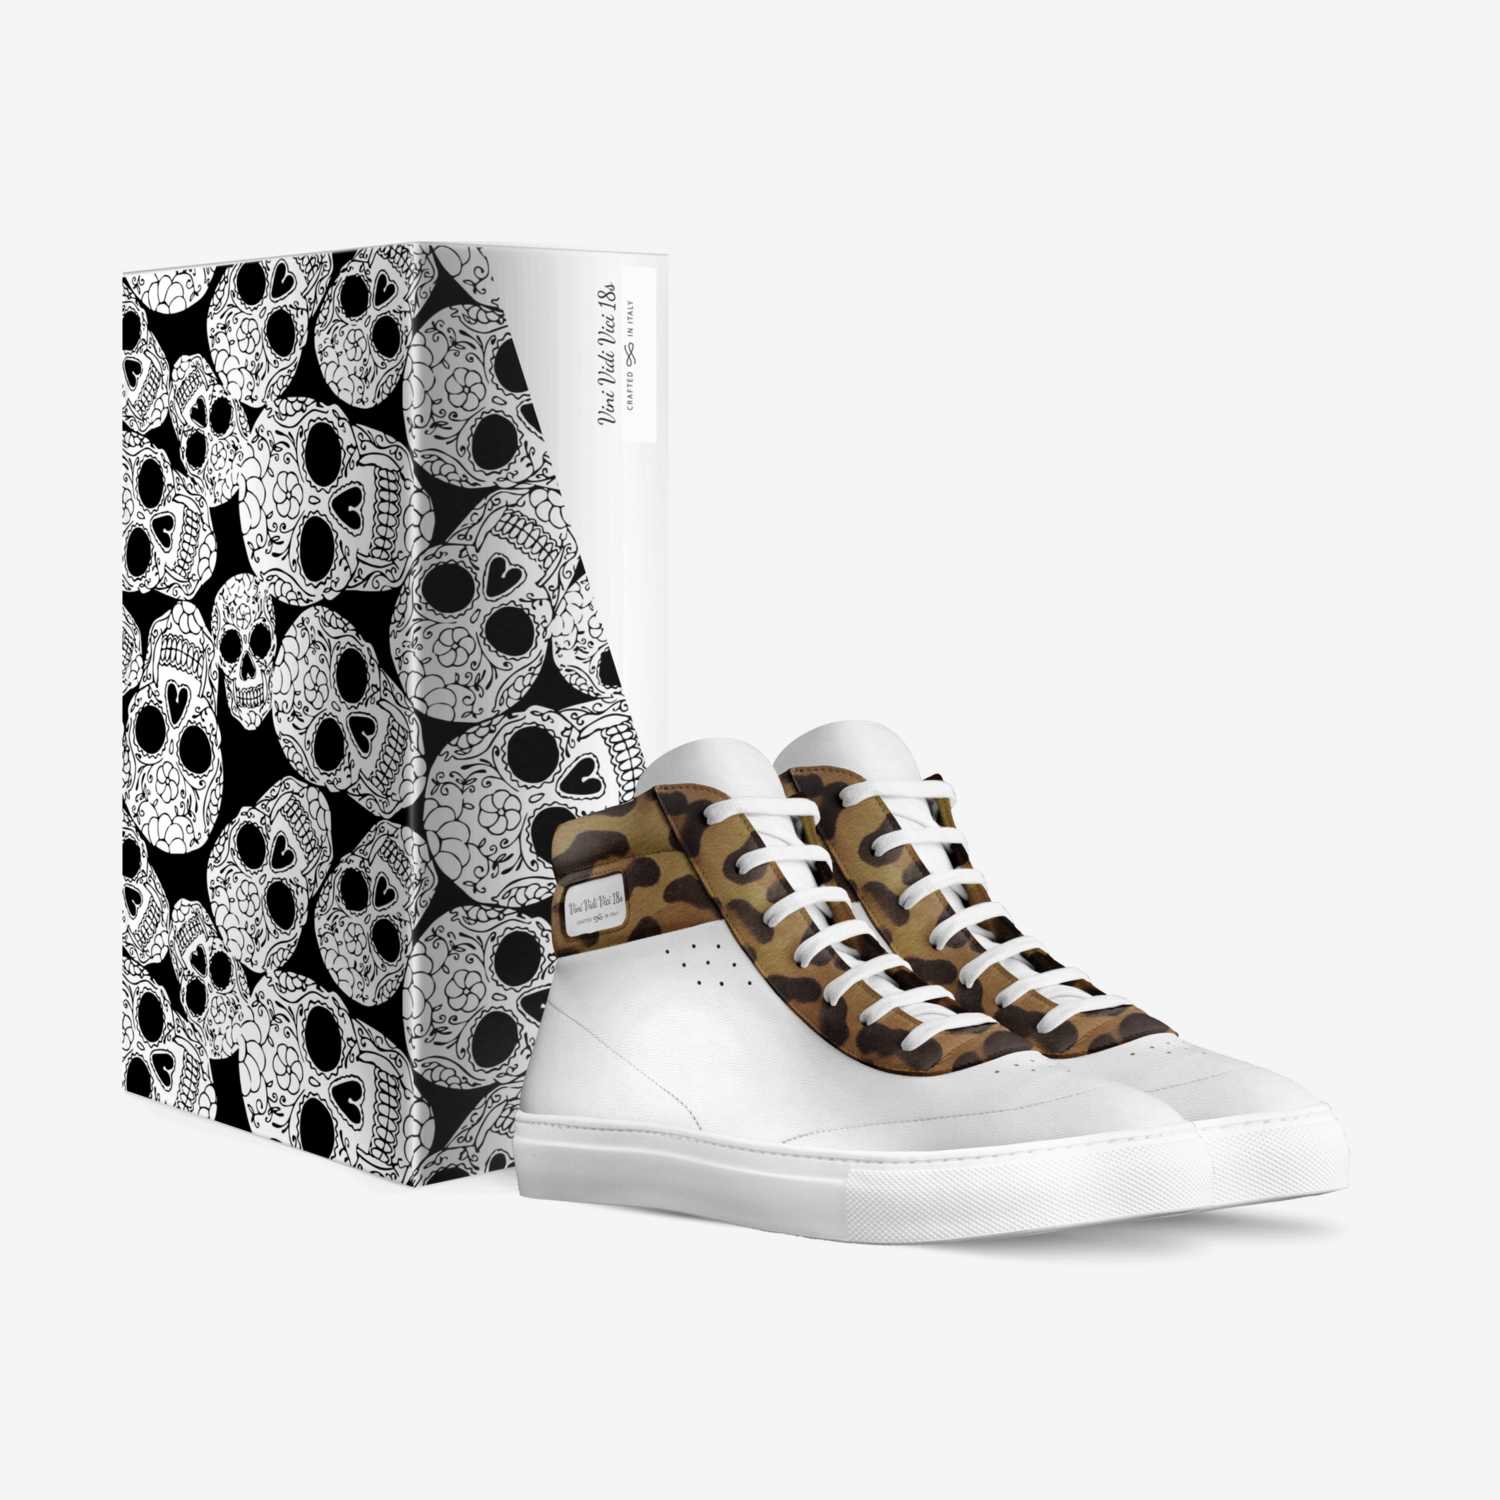 Vini Vidi Vici 18s custom made in Italy shoes by Joseph Smith | Box view